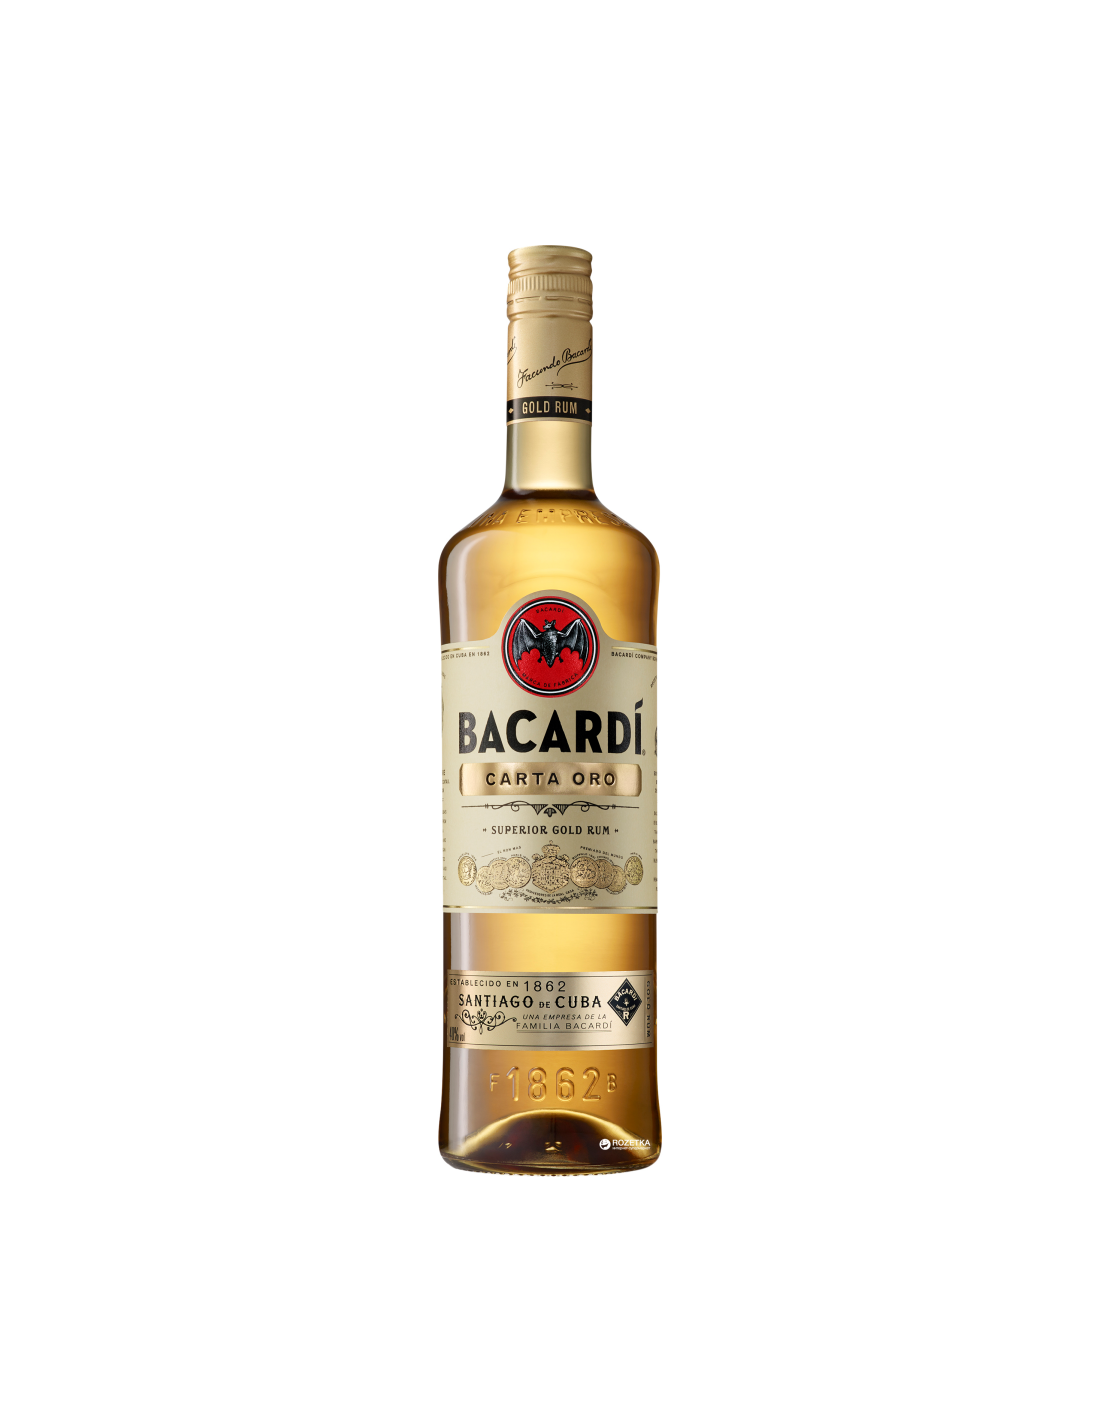 Rom Bacardi Carta Oro, 40% alc., 0.7L, Cuba alcooldiscount.ro